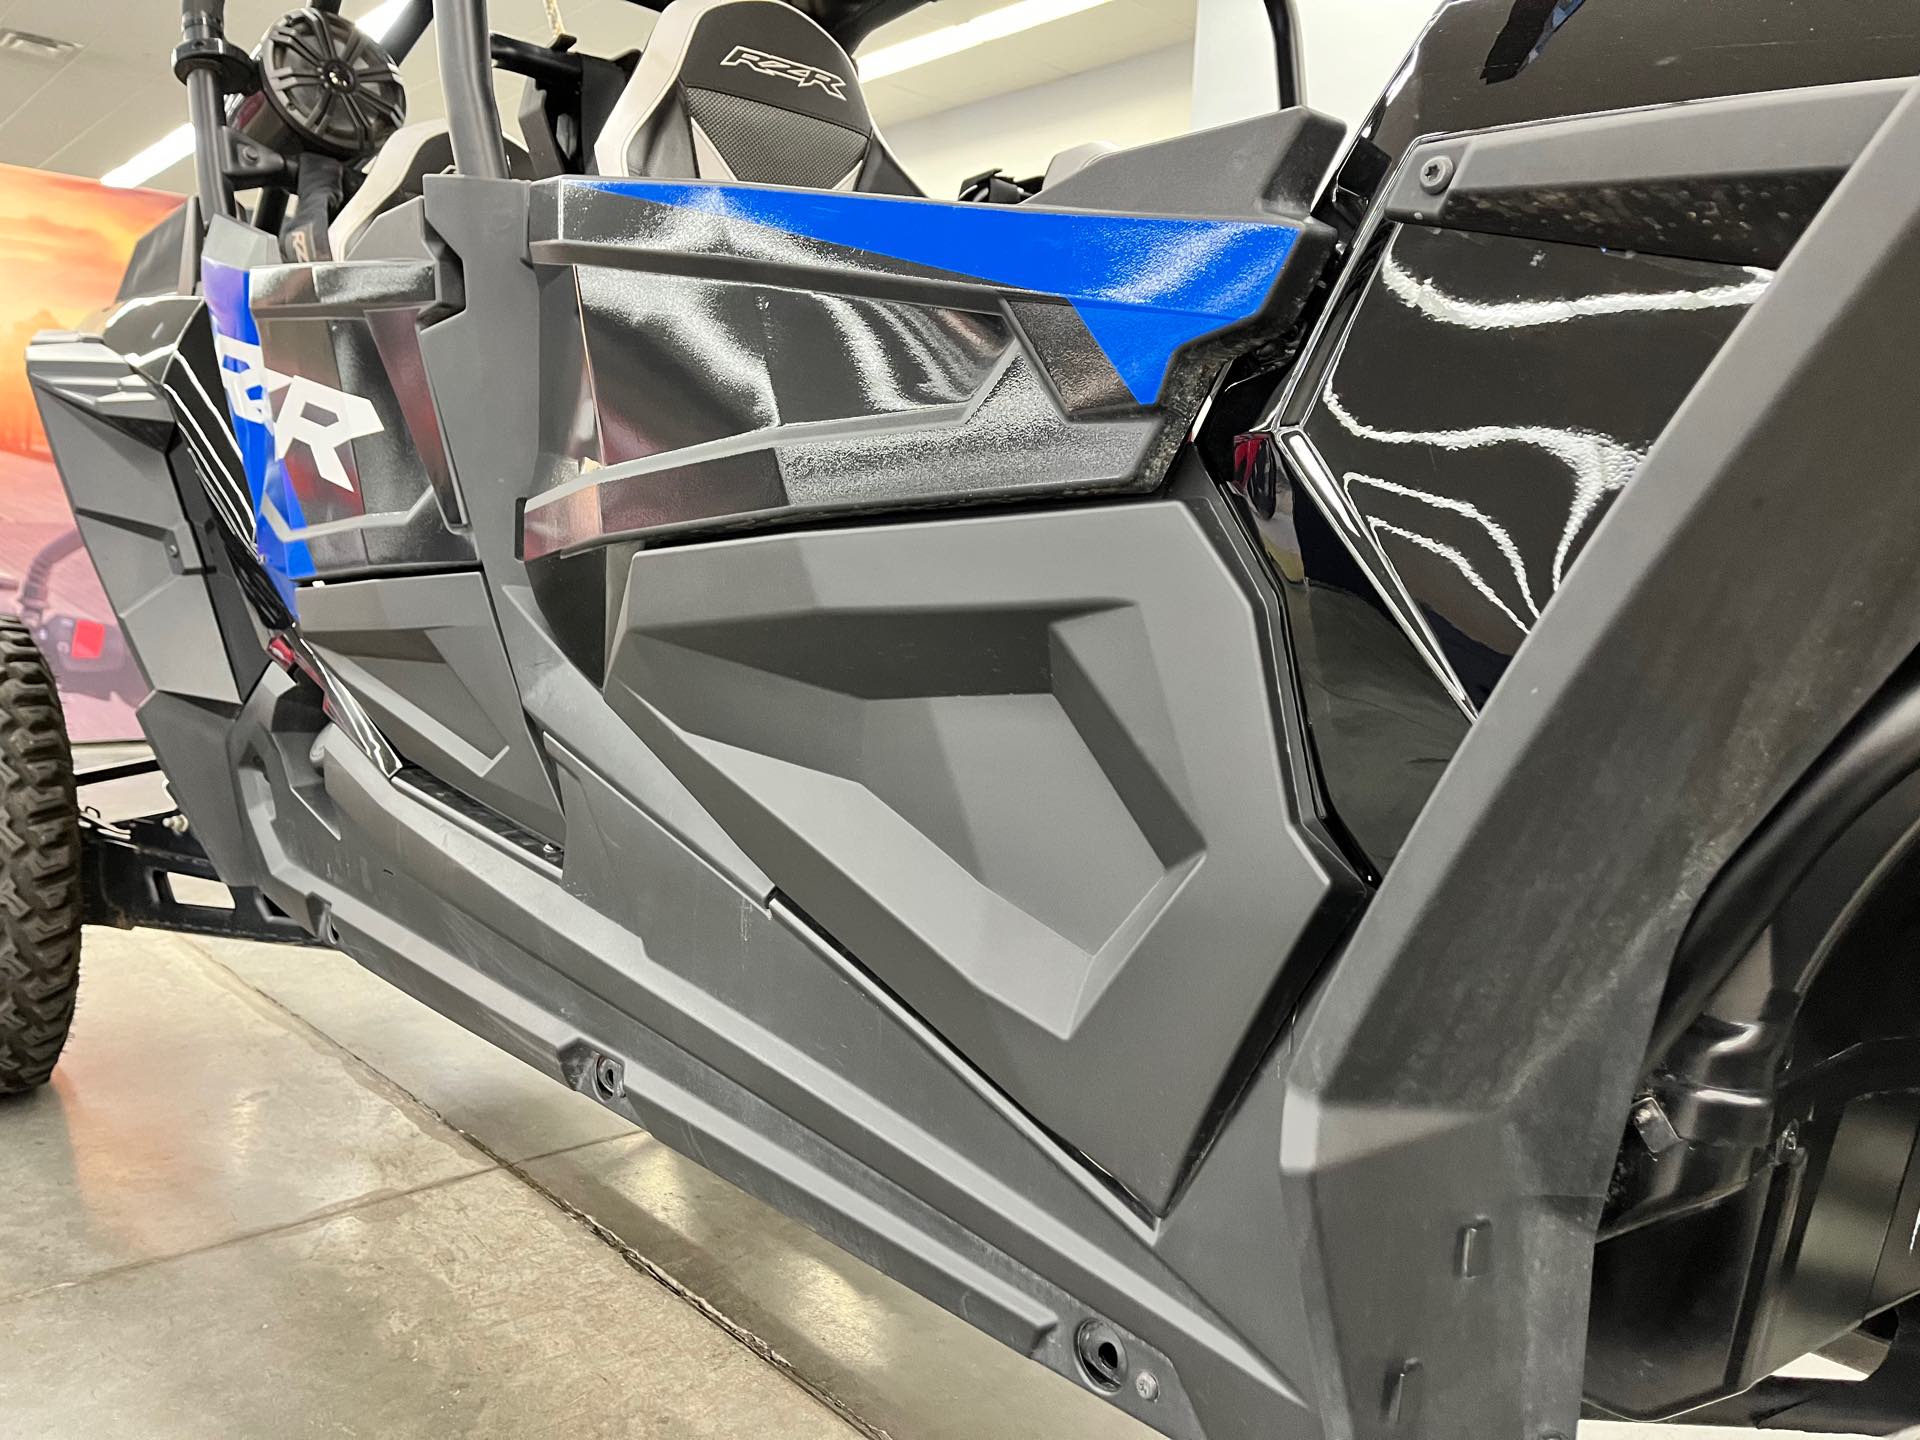 2021 Polaris RZR Turbo S 4 Velocity at Aces Motorcycles - Denver